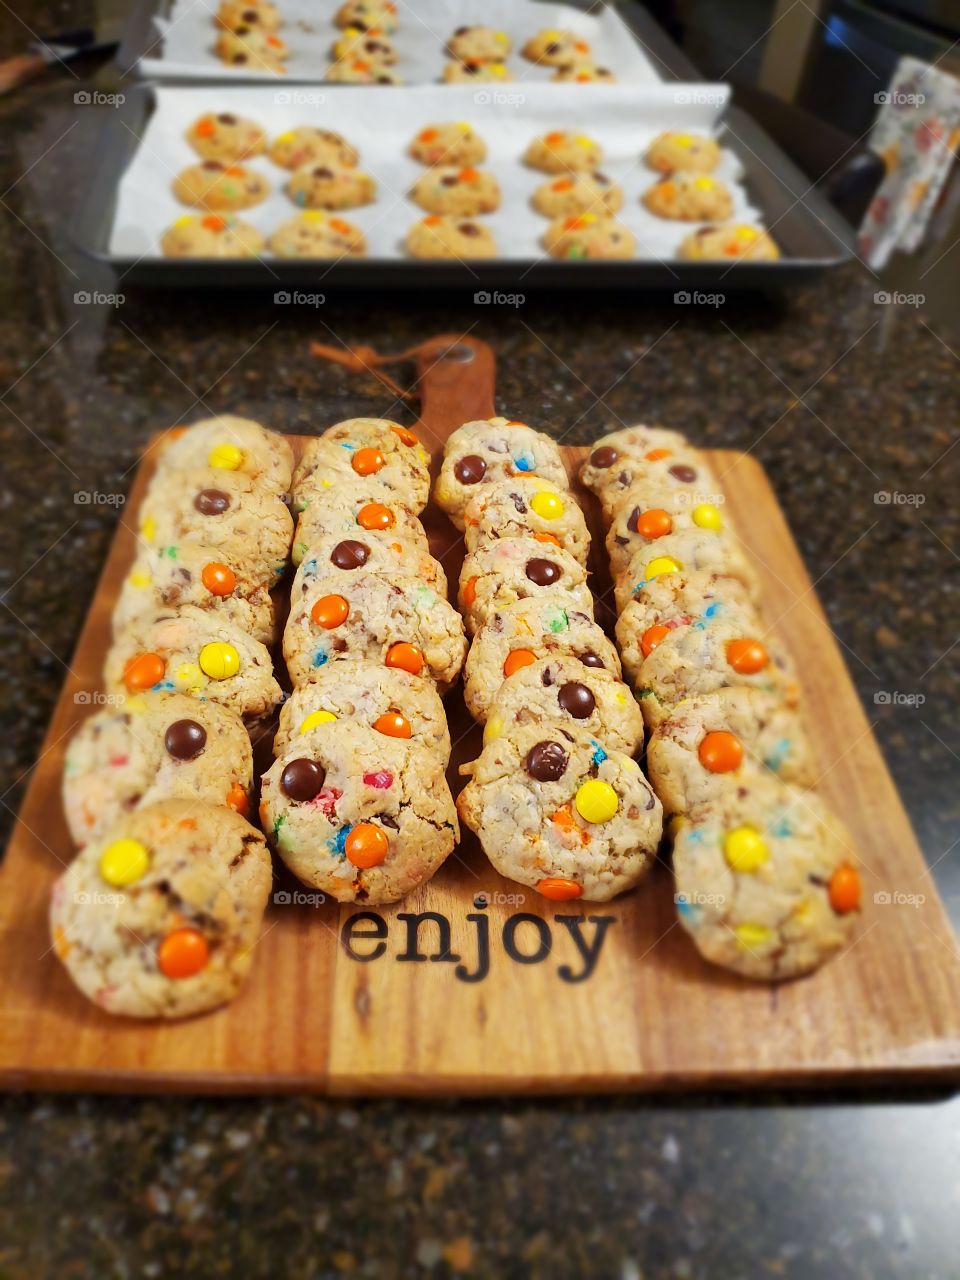 Enjoy some Cookies!